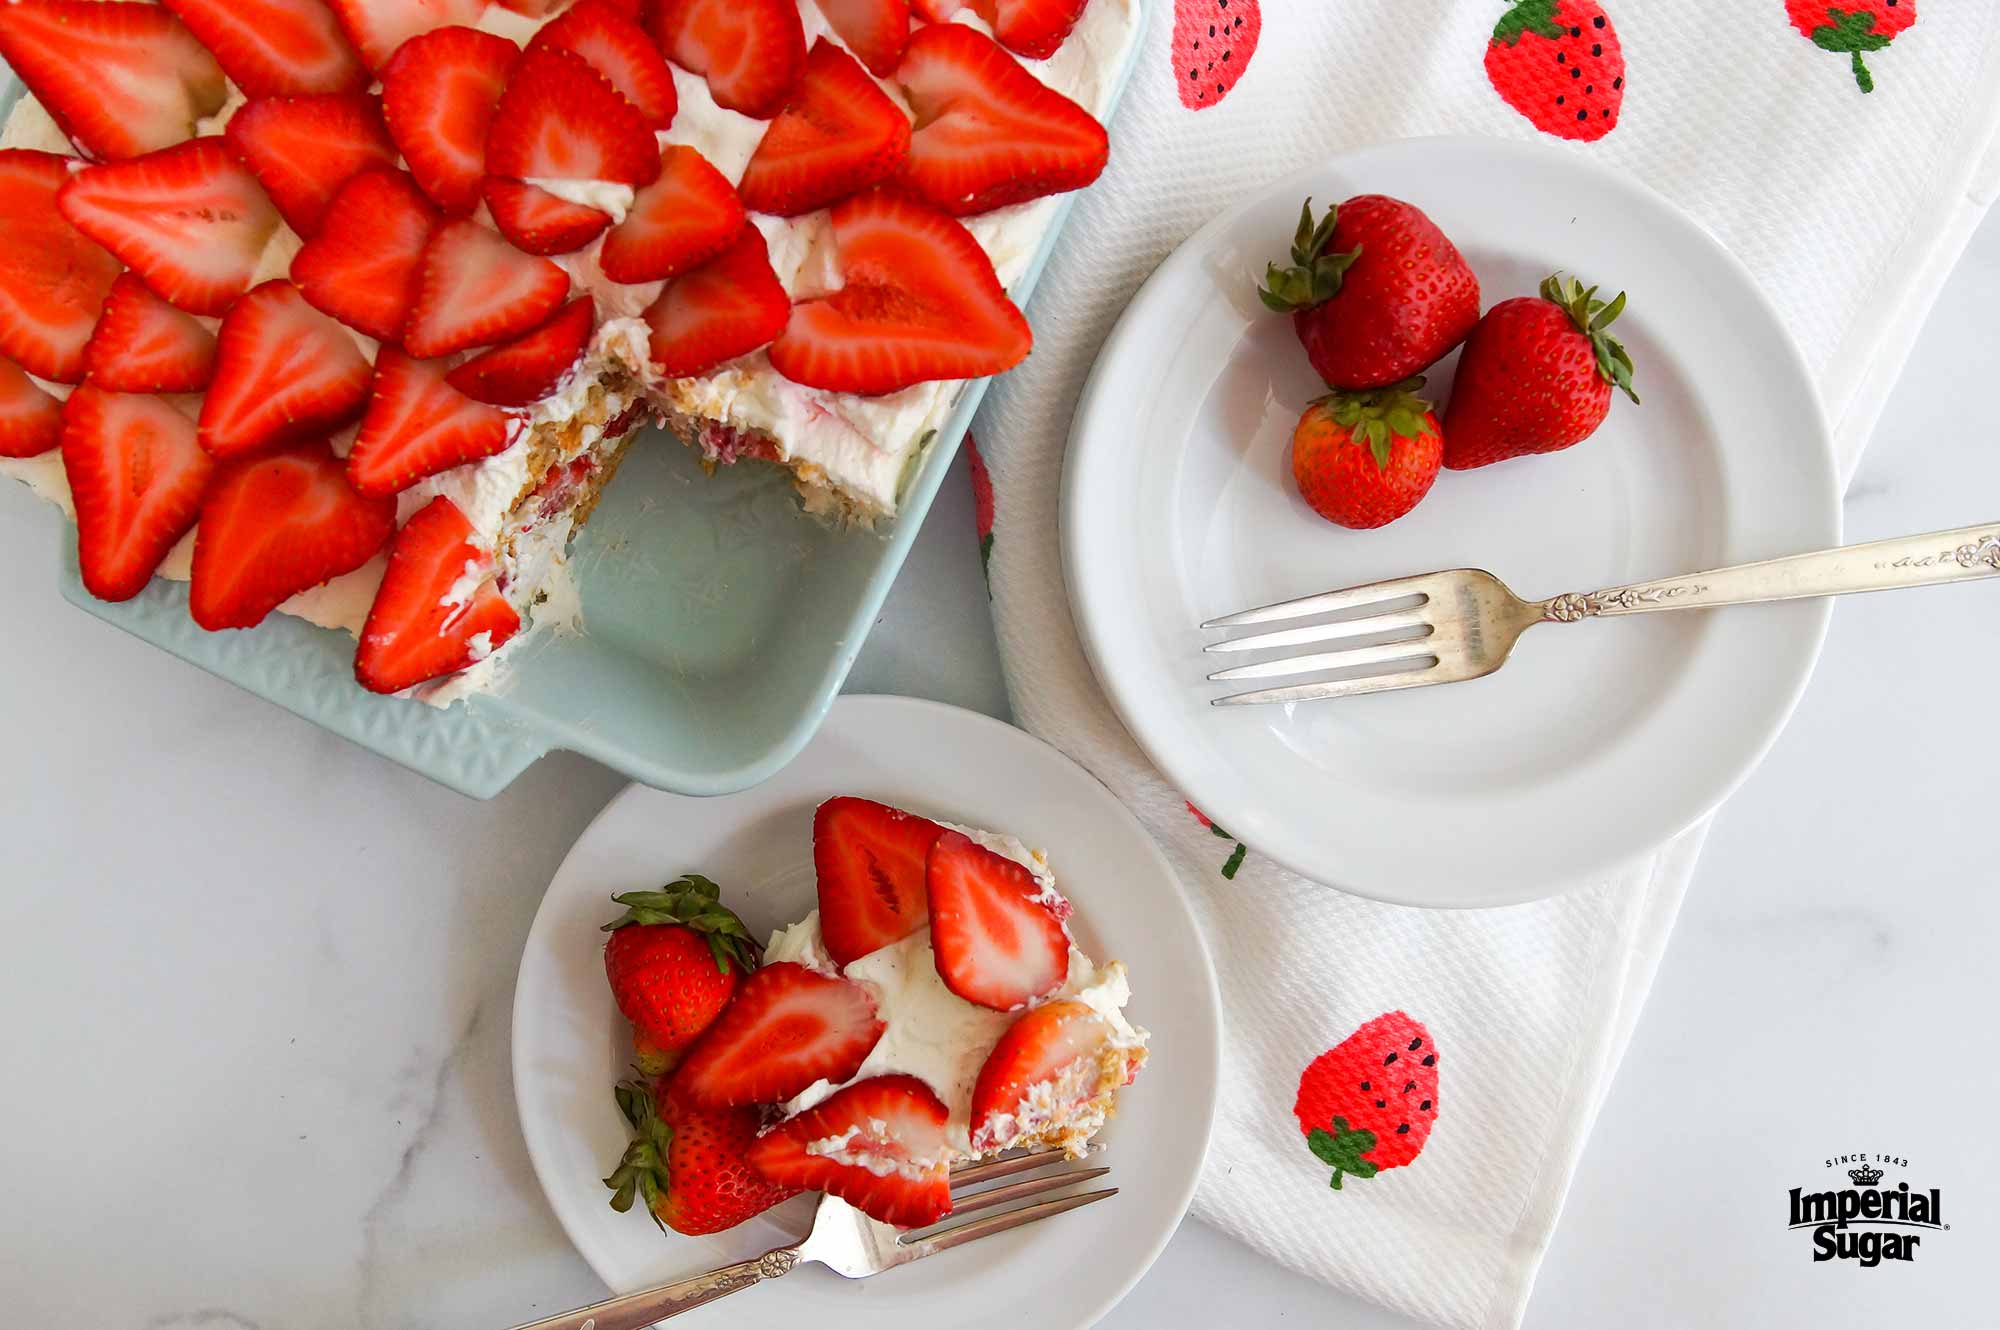 Strawberry Jello Poke Cake (Easy 5-Ingredient Recipe)